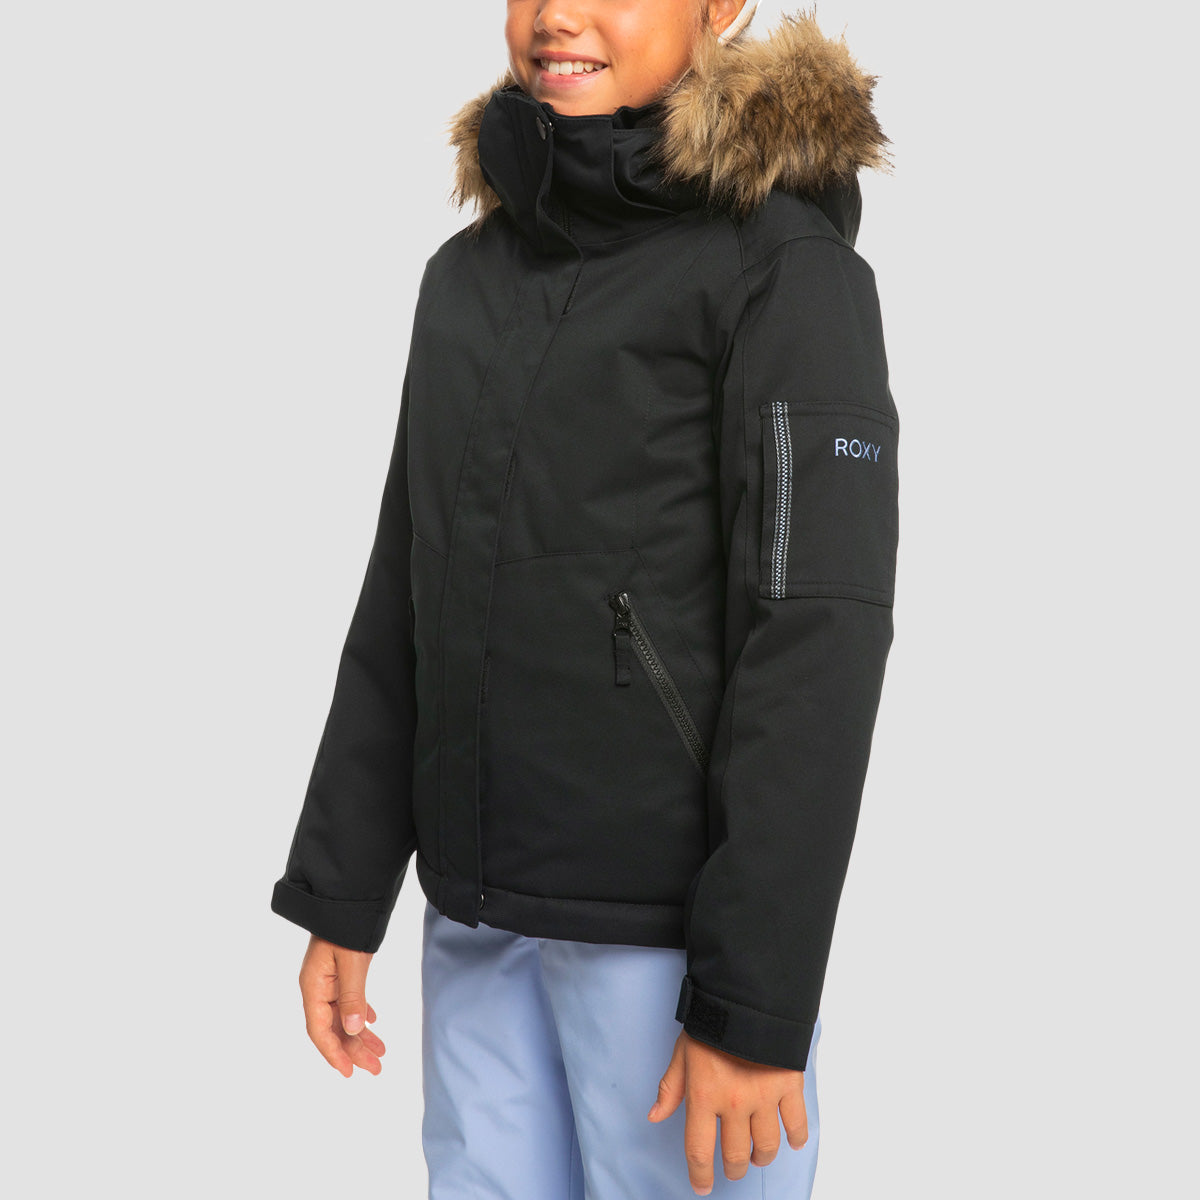 Roxy Meade Insulated Snow Jacket True Black - Girls